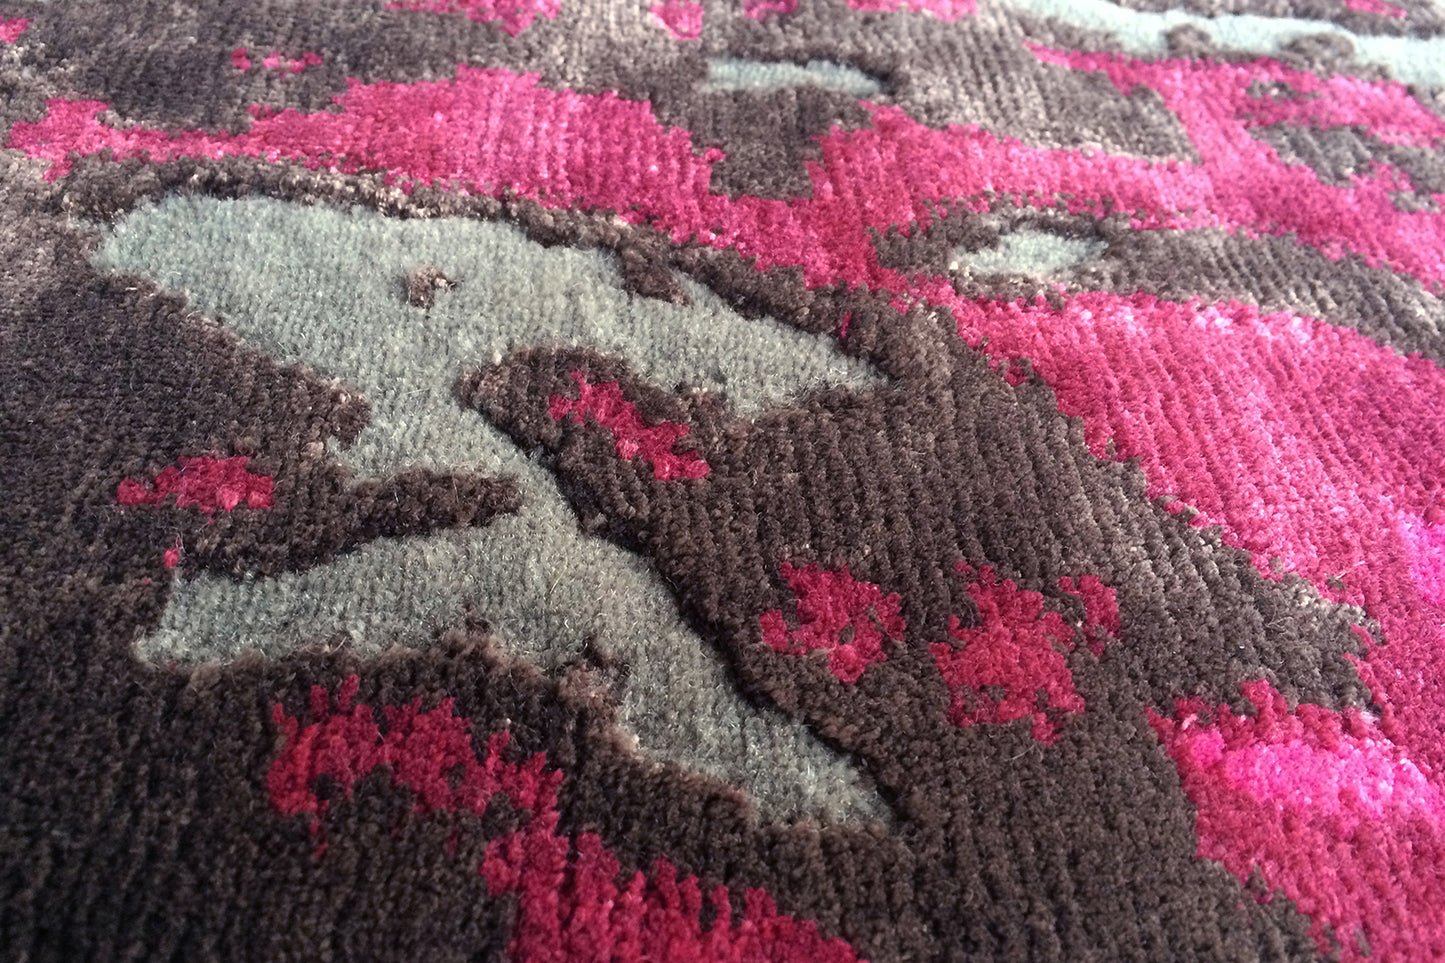 Grass pink fuchsia rug 